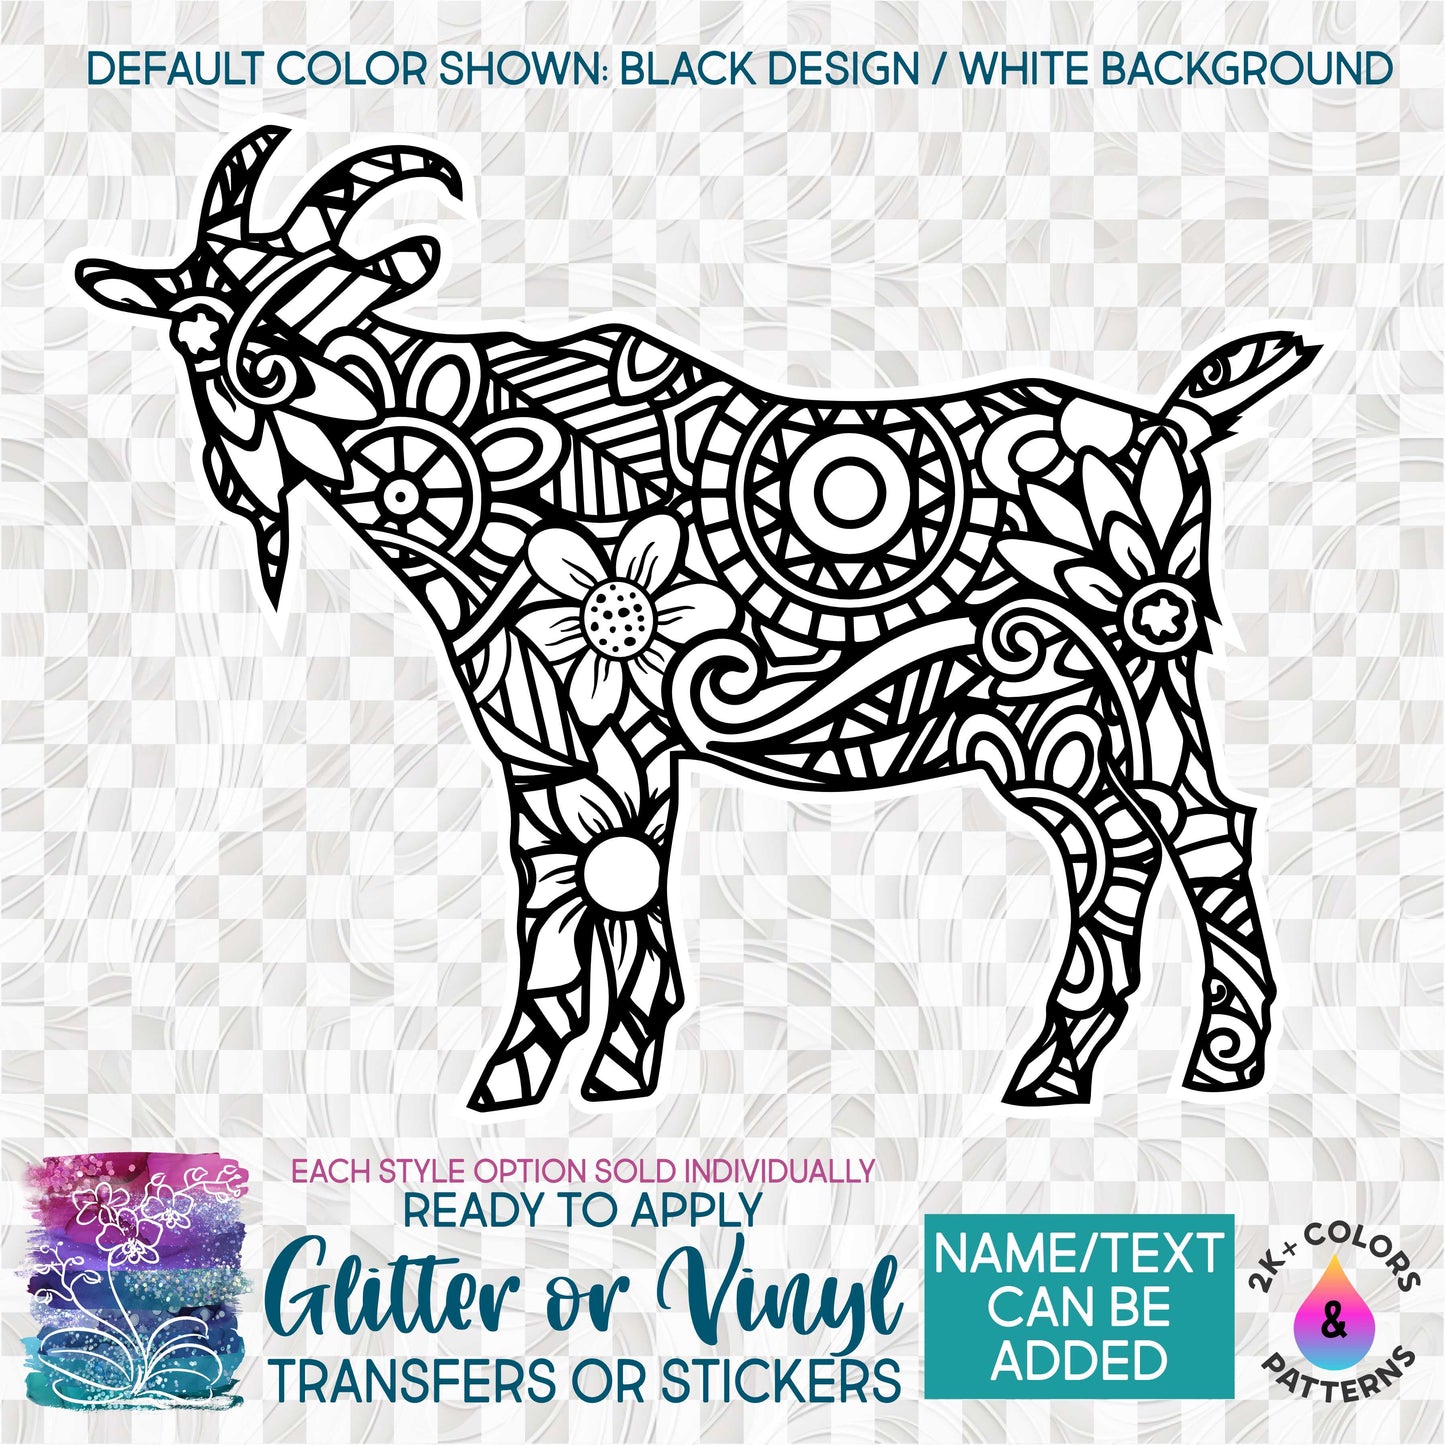 (s011-Z3) Goat Zentangle Mandala Floral Doodle Glitter or Vinyl Iron-On Transfer or Sticker